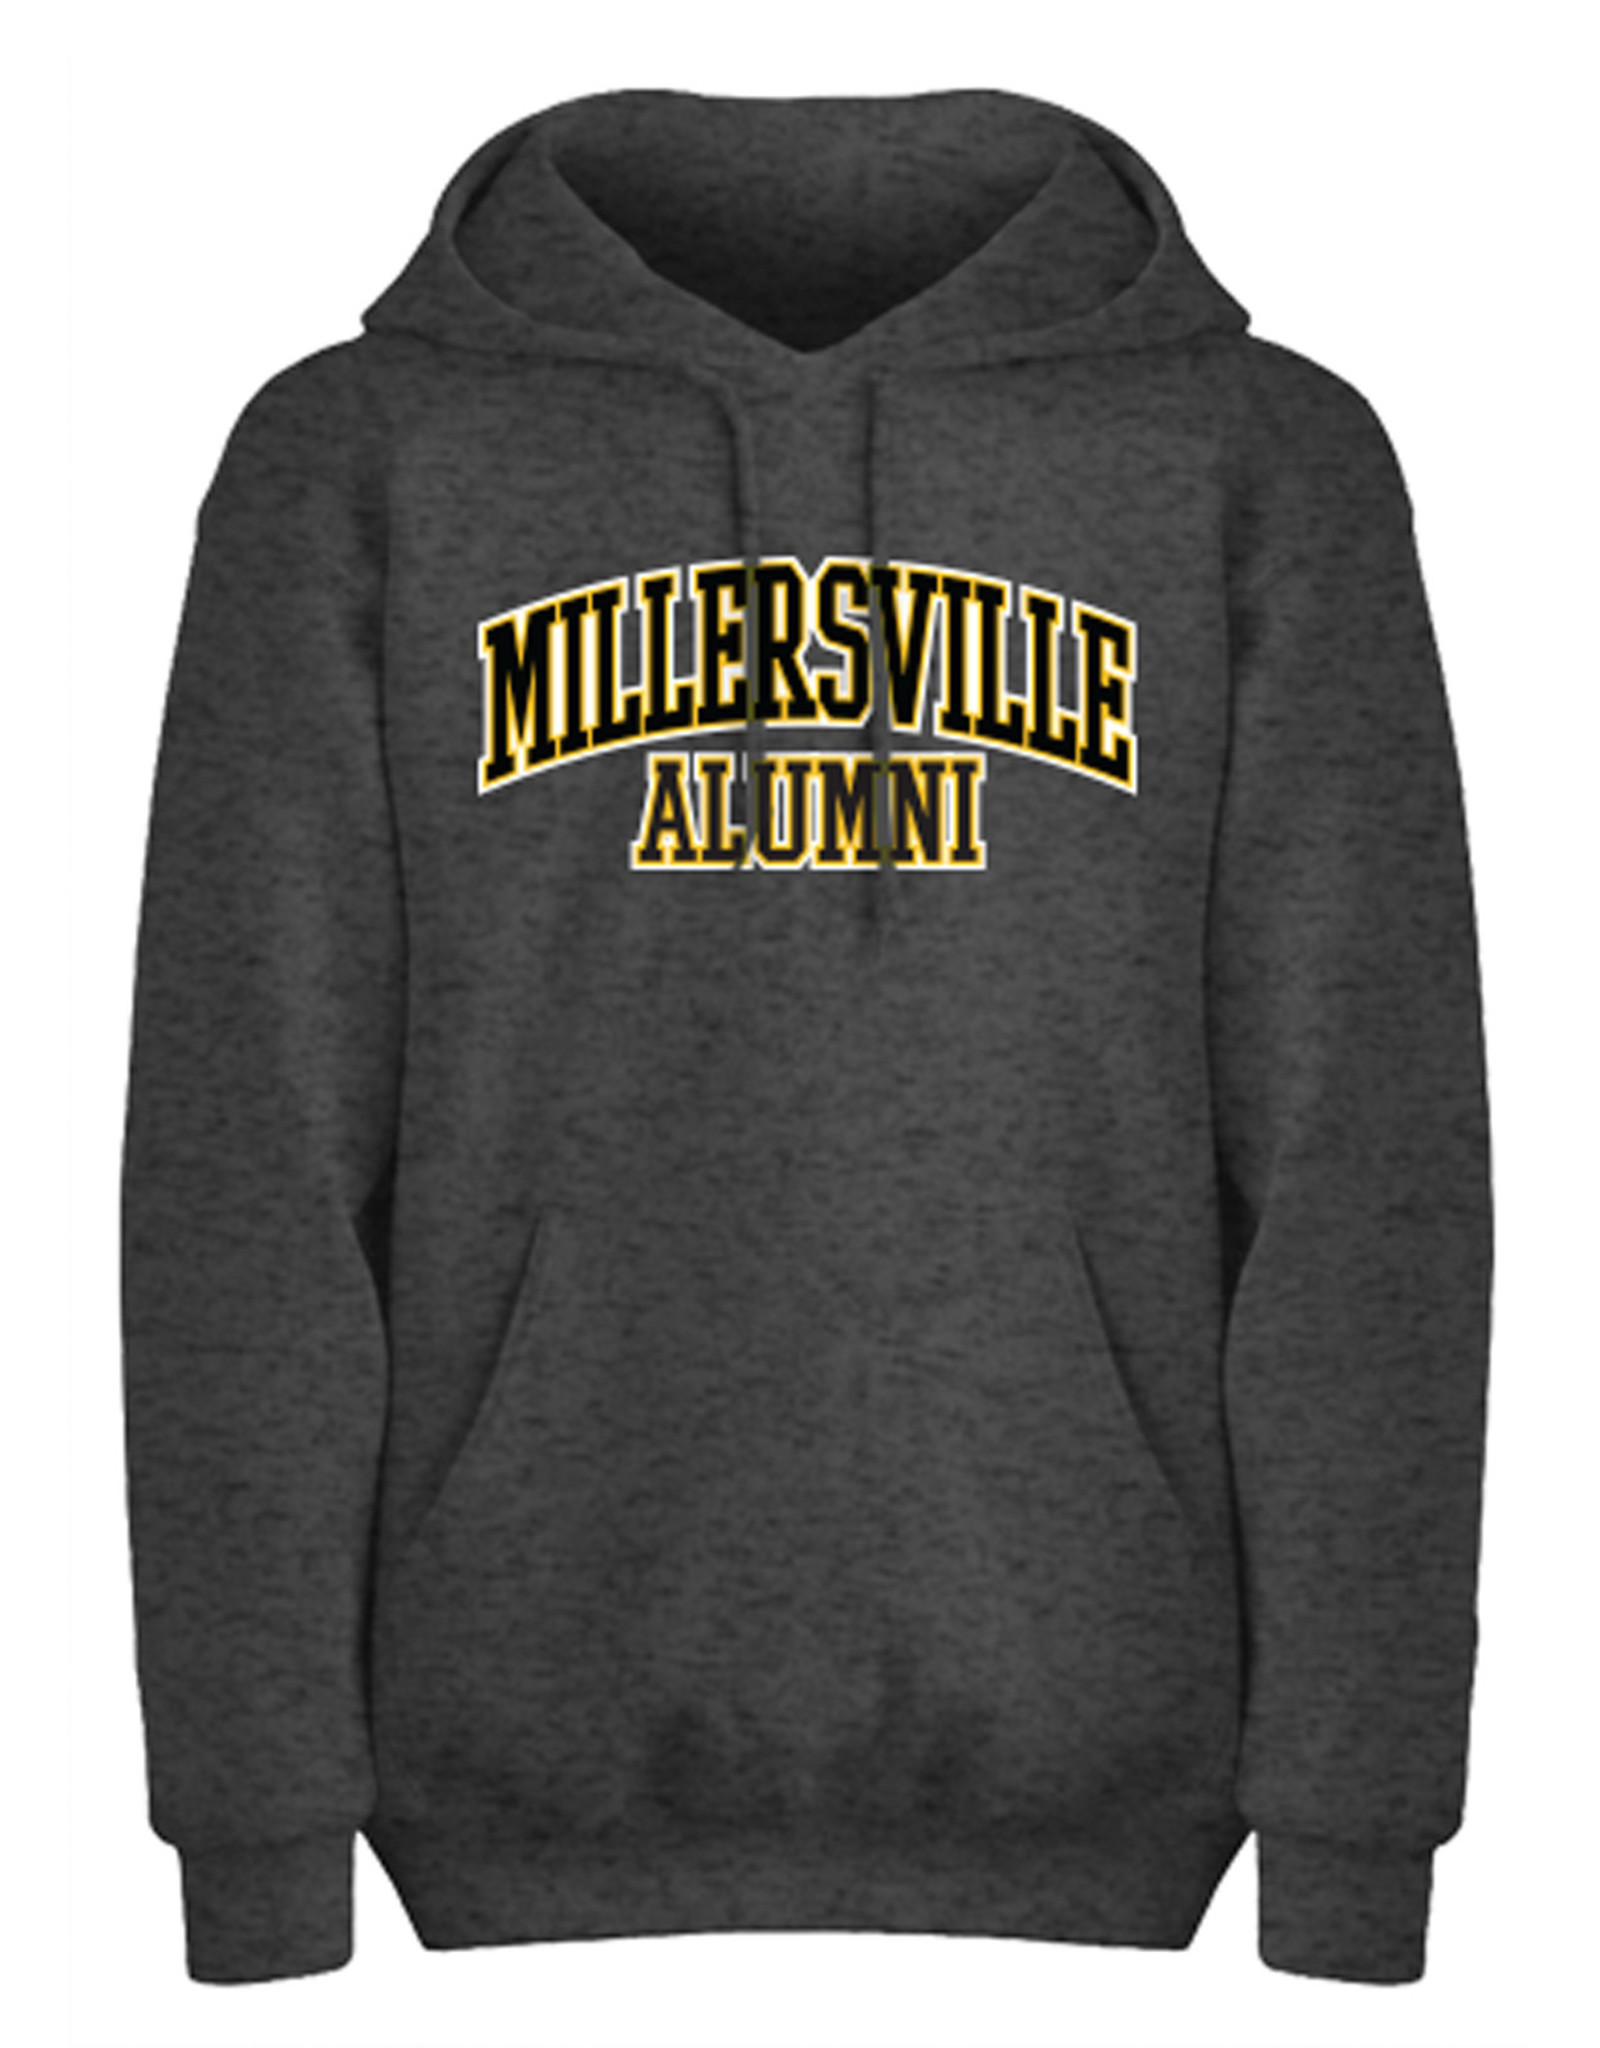 Charcoal Twill Hooded Alumni Sweatshirt - Sale!